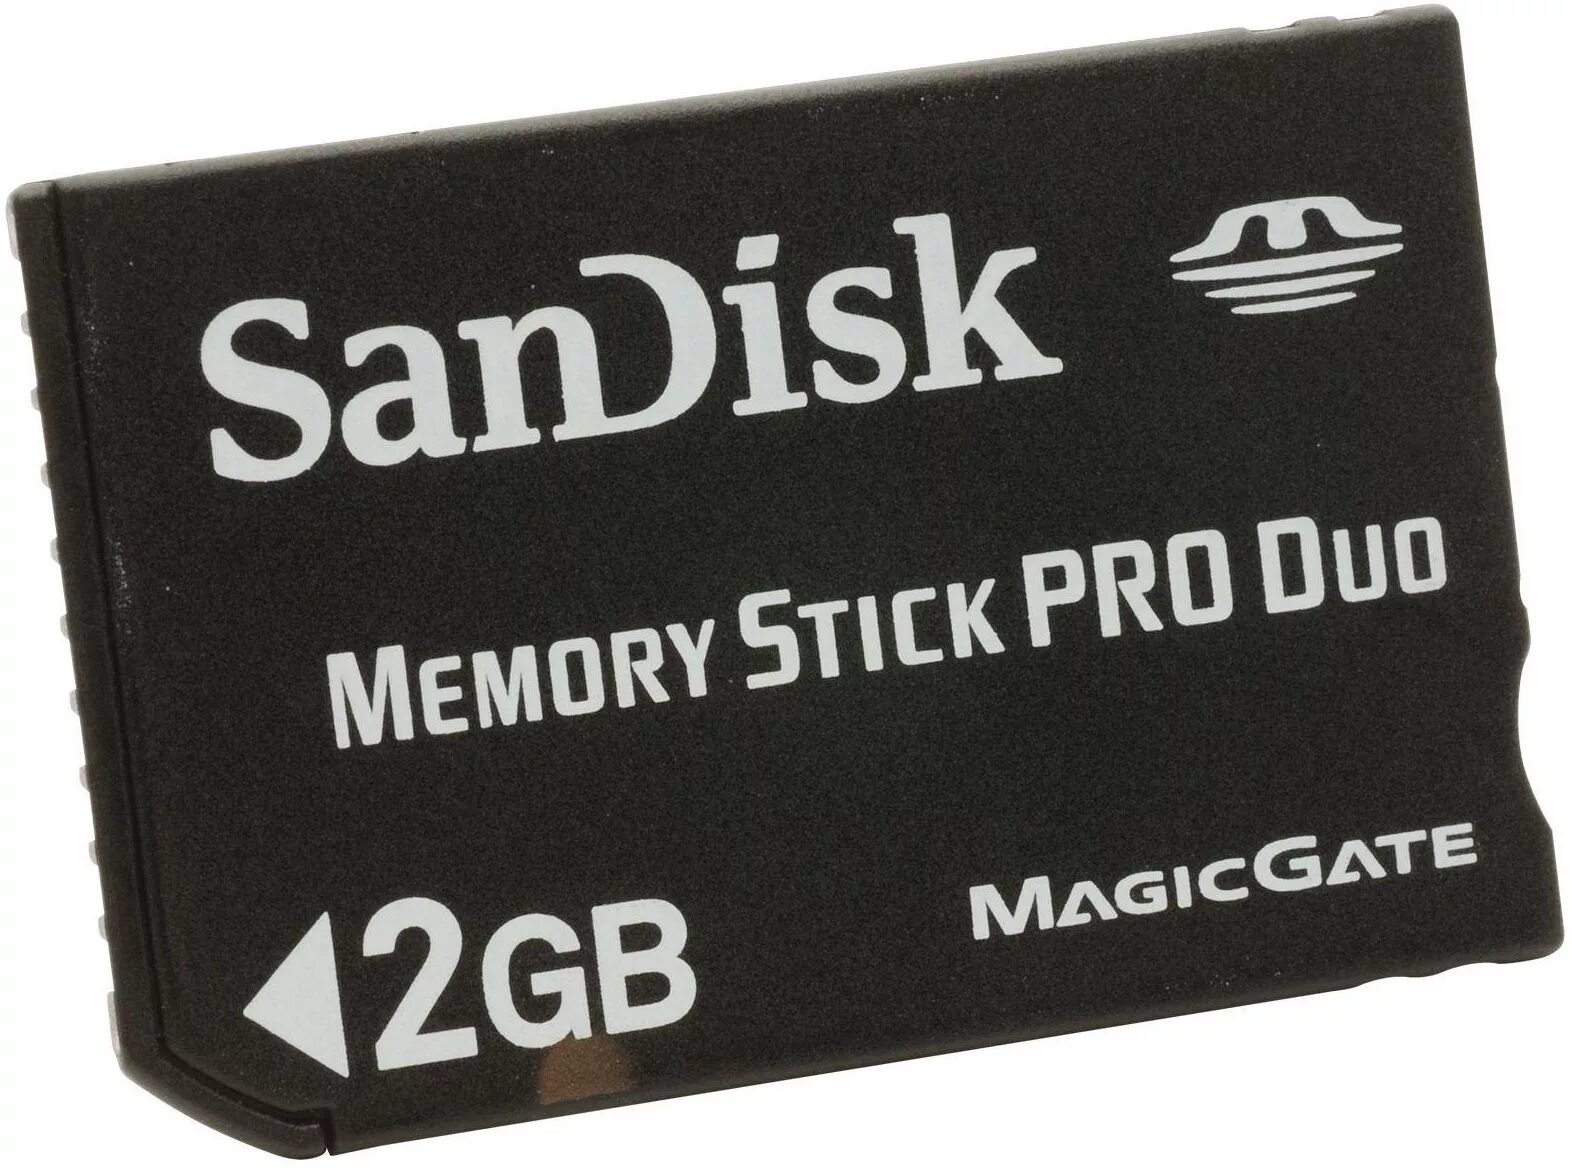 Pro duo купить. Memory Card MS Pro Duo. Sony Memory Stick Pro Duo 4gb. Флешка Memory Stick Pro. MS Duo карта памяти.